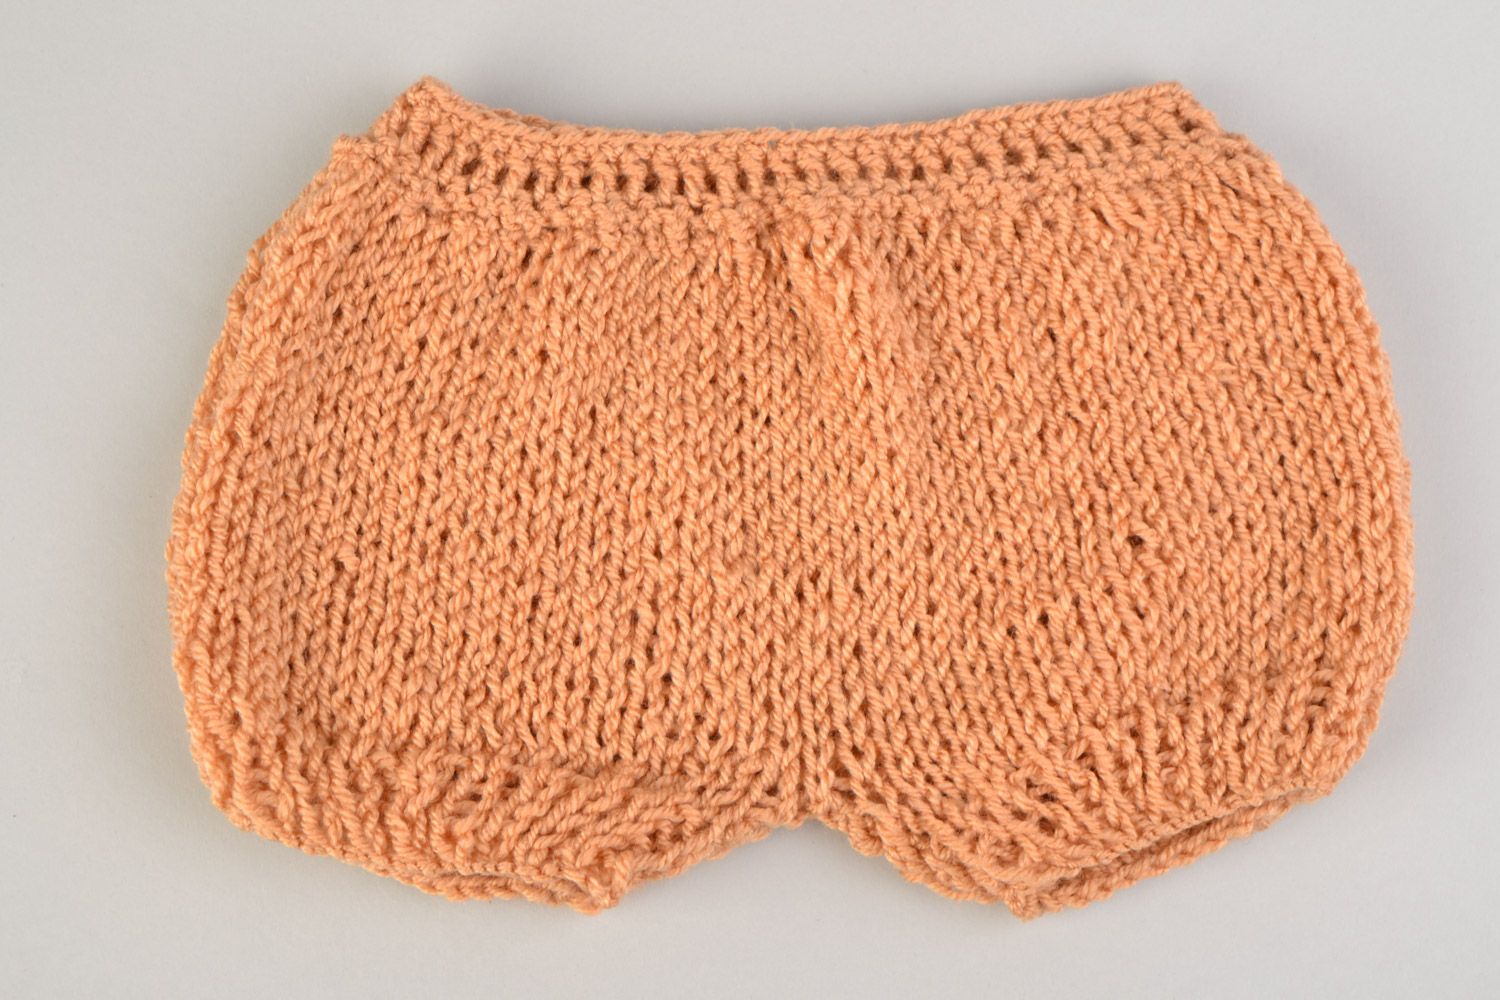 Handmade baby shorts crocheted of light brown hypoallergenic acrylic threads photo 2